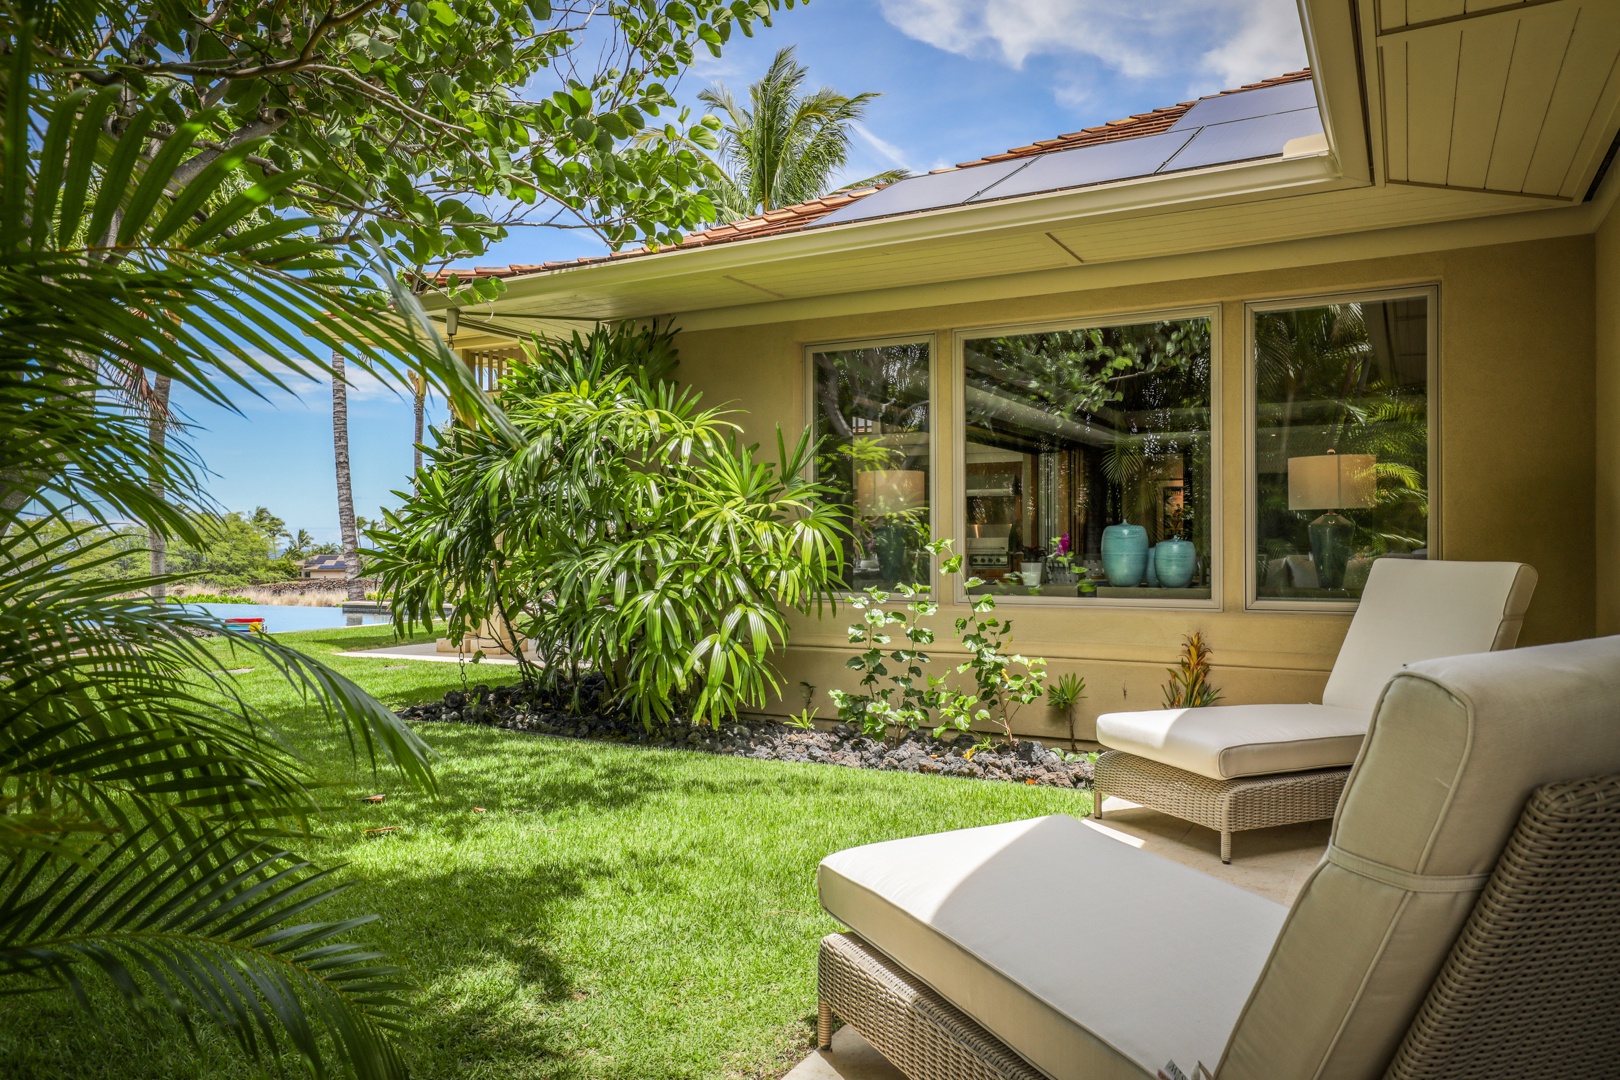 Kailua Kona Vacation Rentals, 4BD Hainoa Estate (122) at Four Seasons Resort at Hualalai - Private lanai with tropical landscaping outside Guest Room 2.